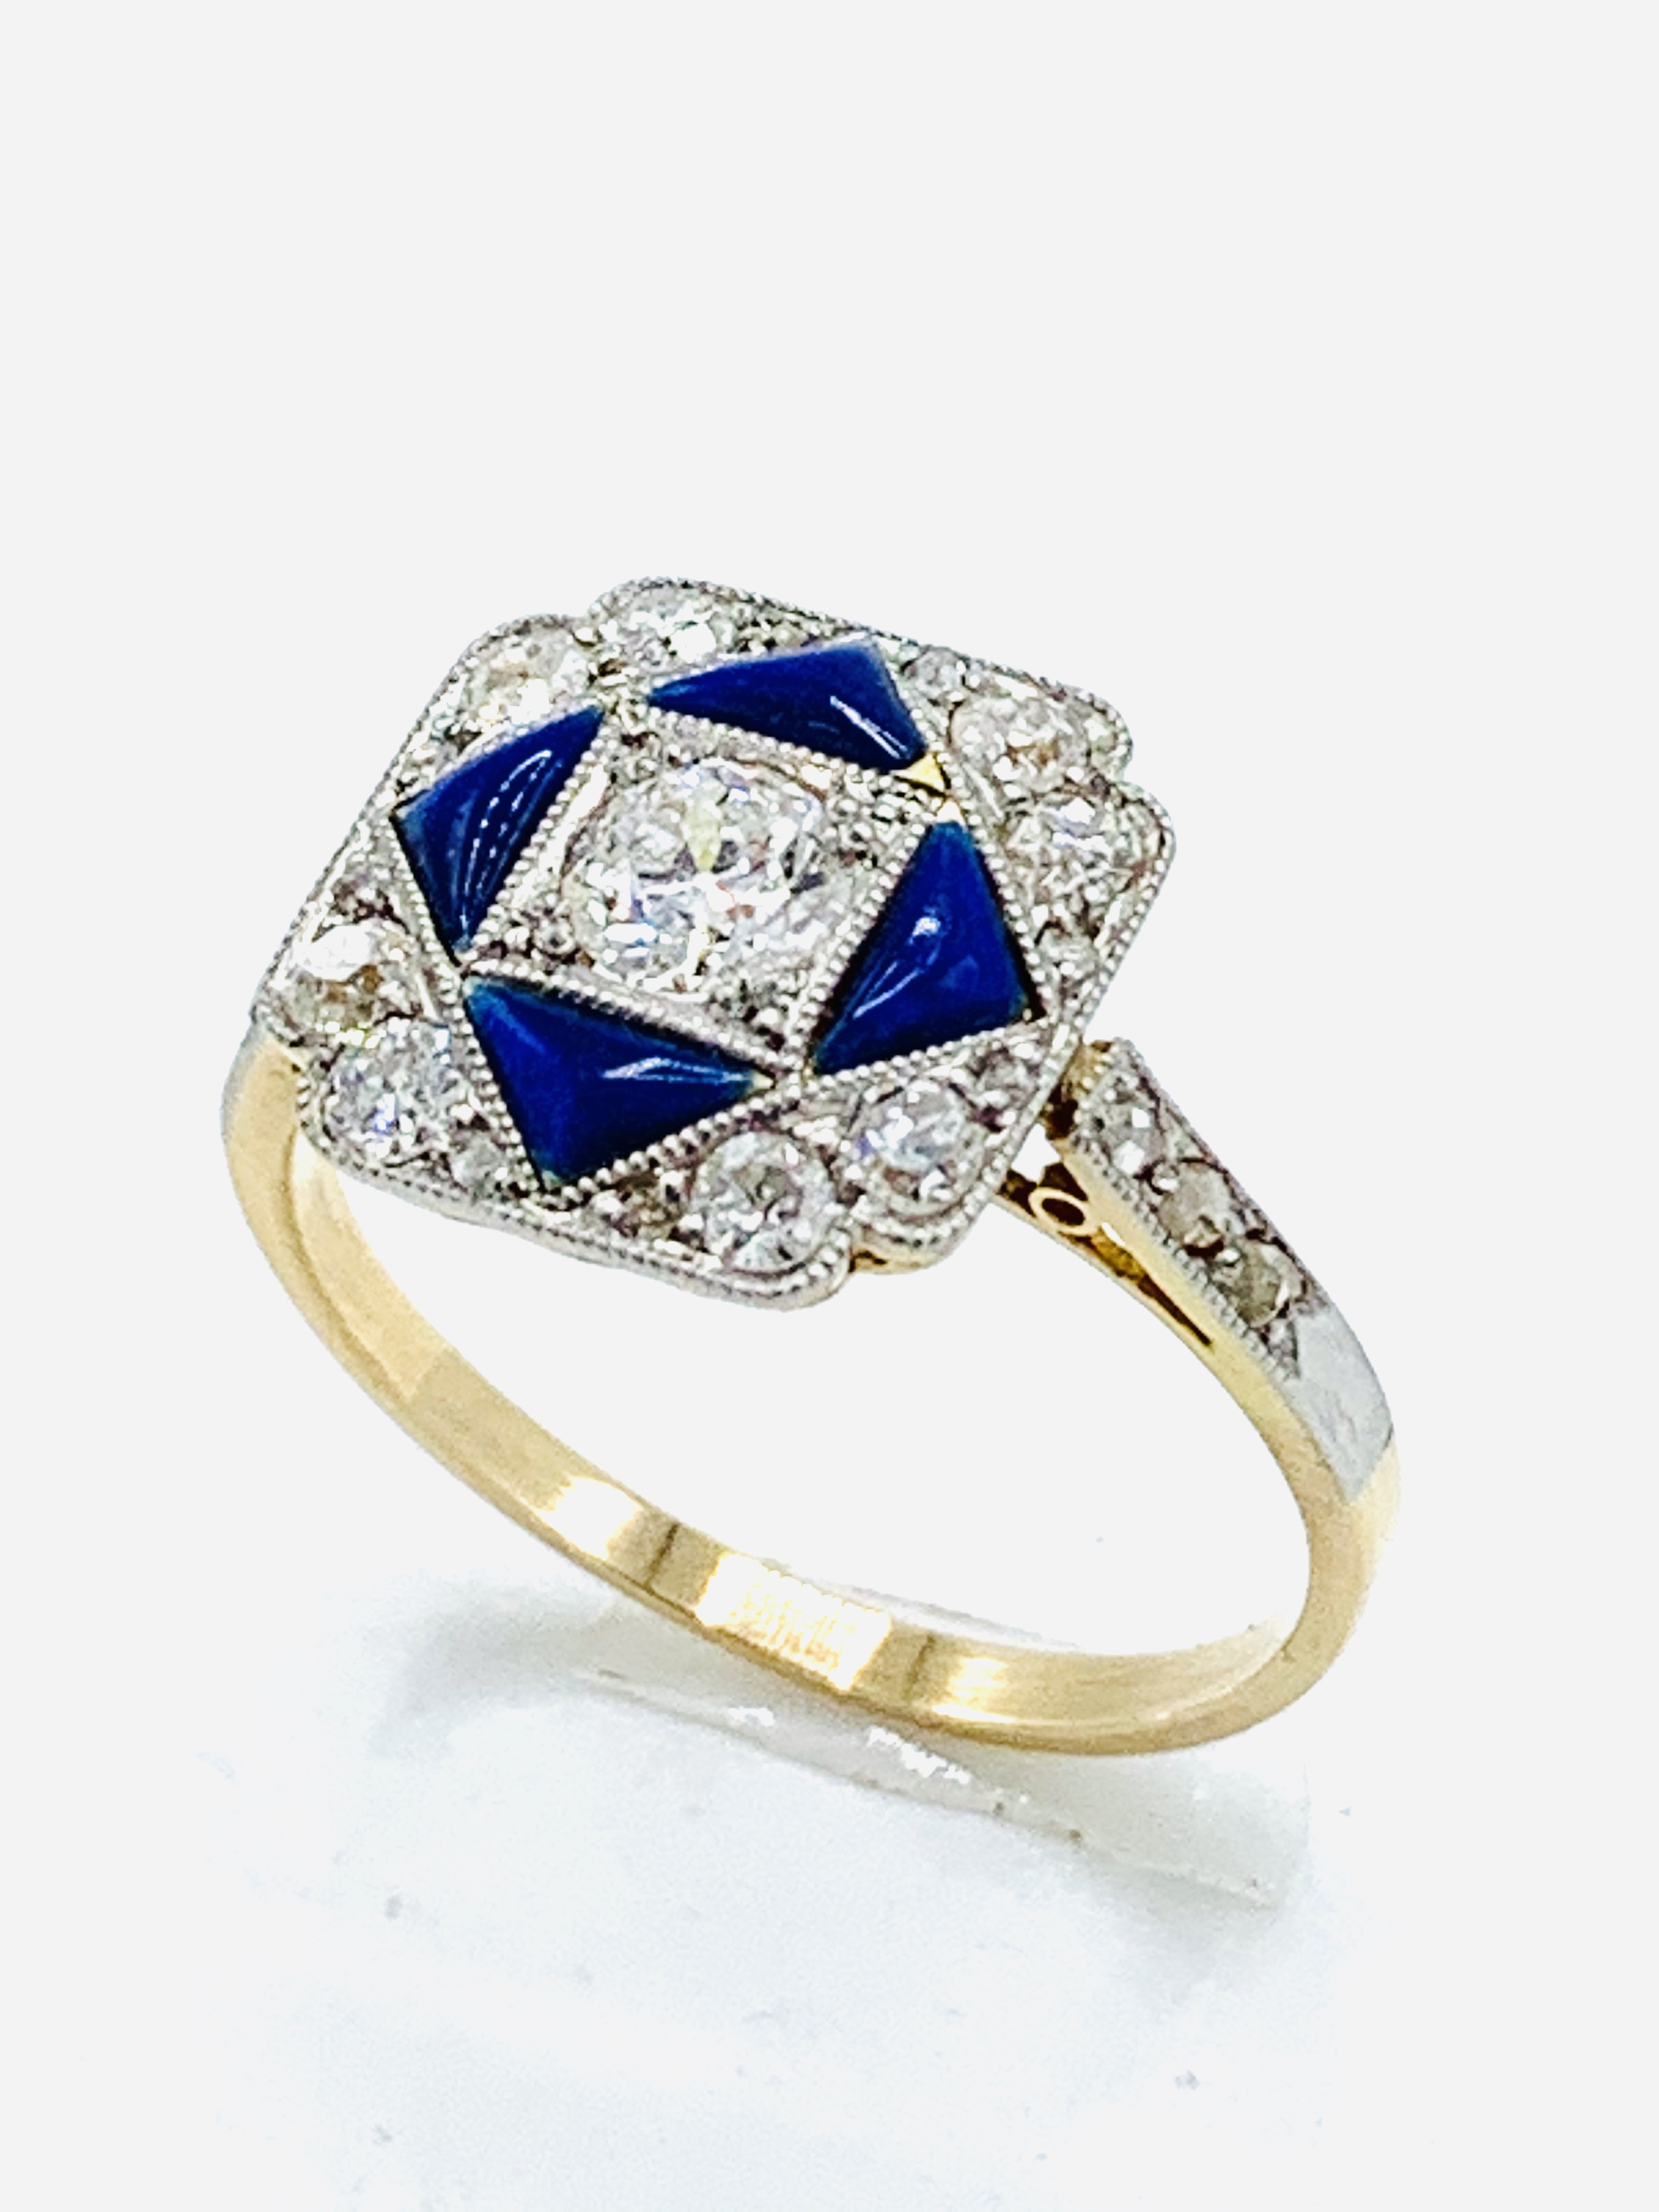 Diamond and blue enamel ring. - Image 5 of 9